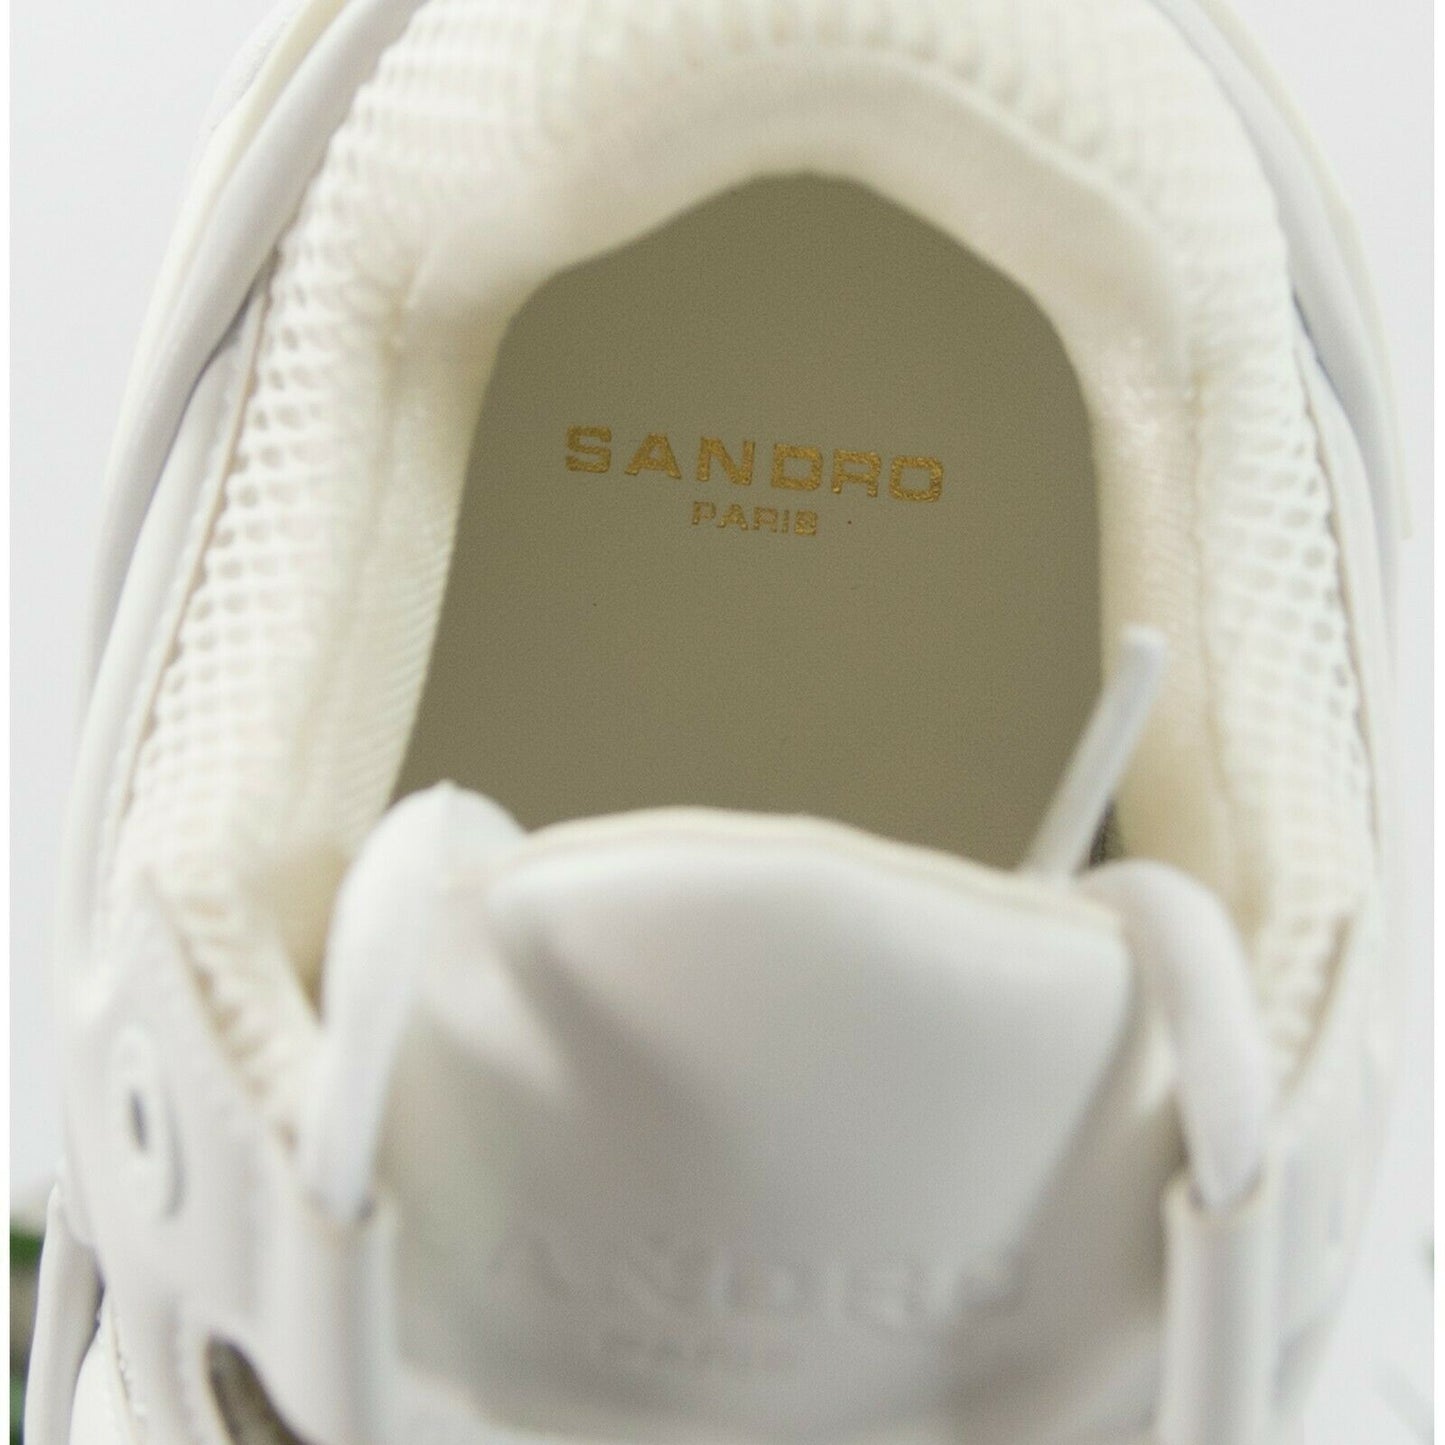 Sandro Atomic Monochrome White Leather Fabric Sneaker Shoes Size 42 US 9